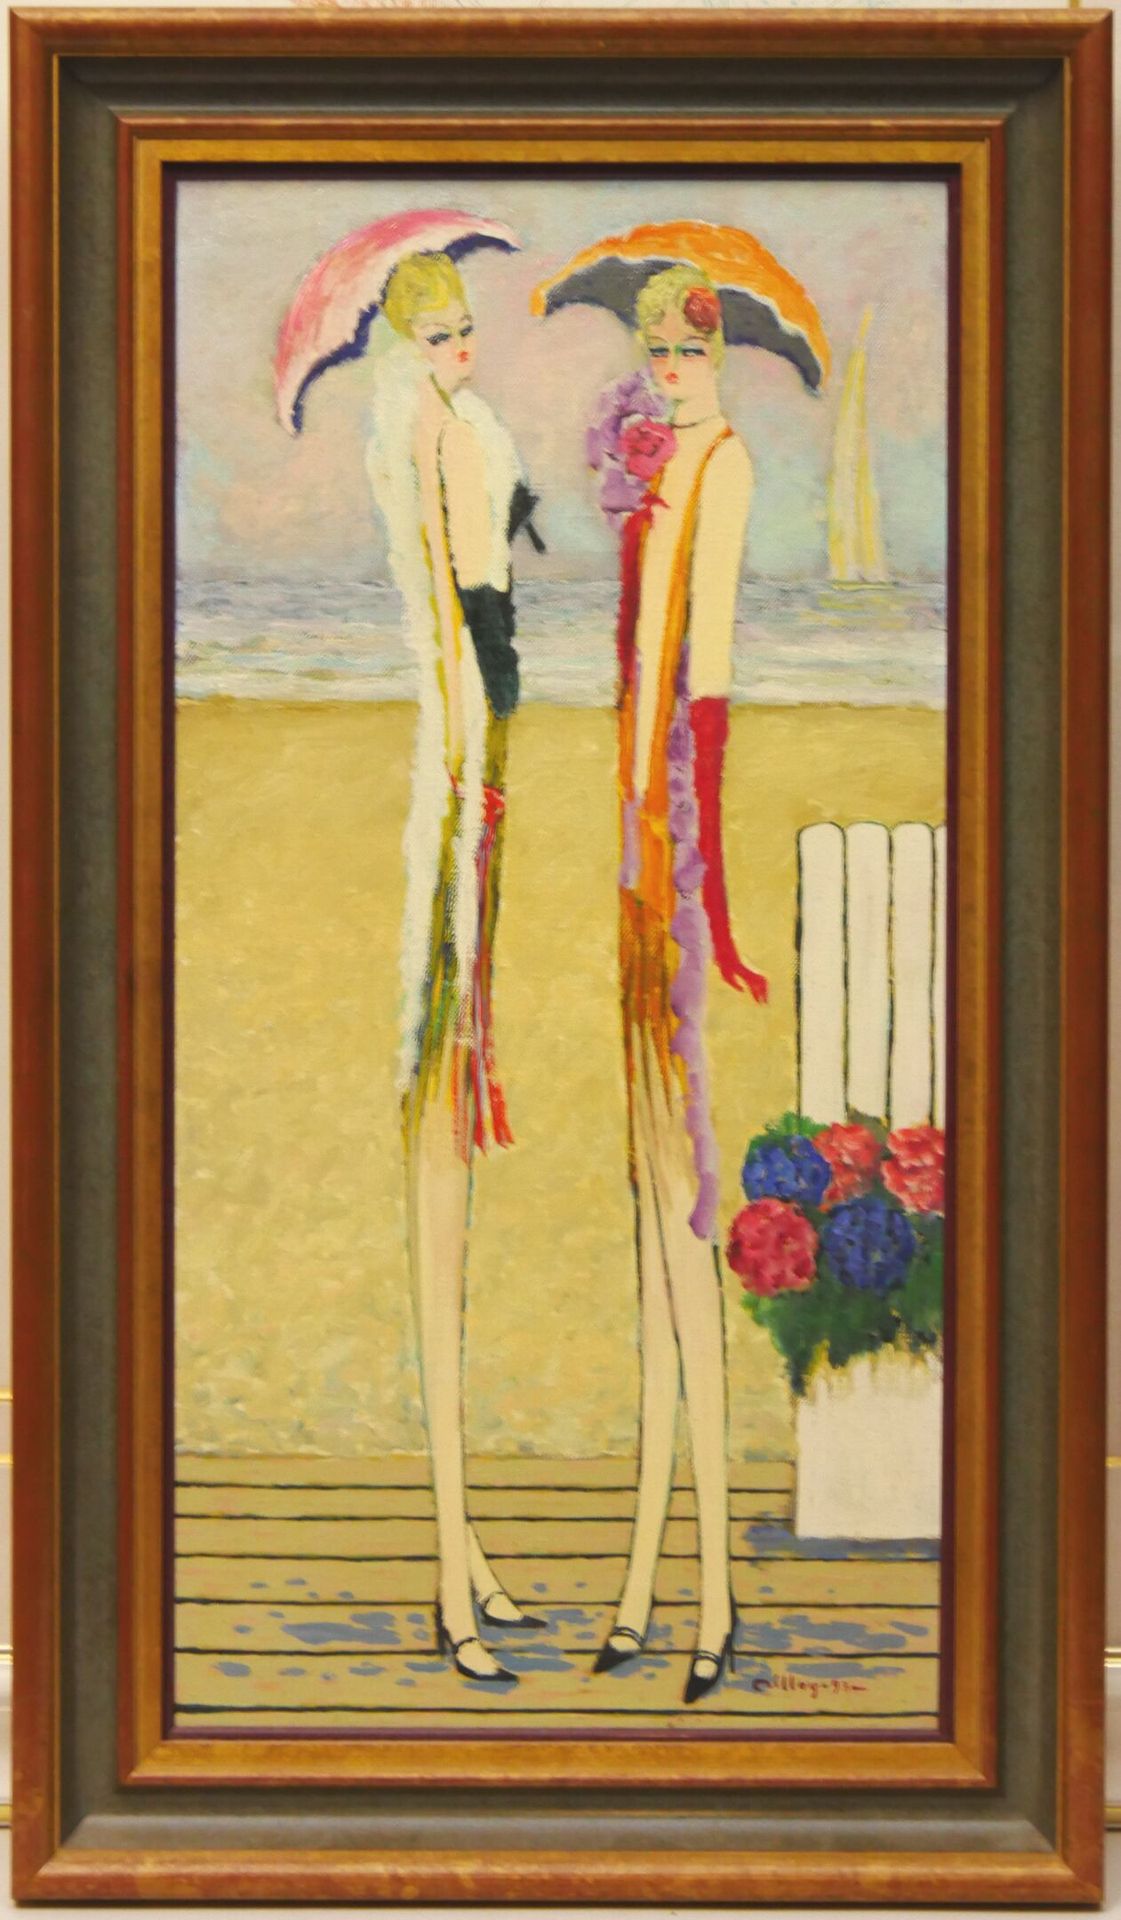 Null 拉蒙-迪尔利 (1932 - )

多维尔--梅切蒂尔德人

布面油画，右下角有签名和日期93

60 x 30厘米



拍卖会将于2022年6月1&hellip;